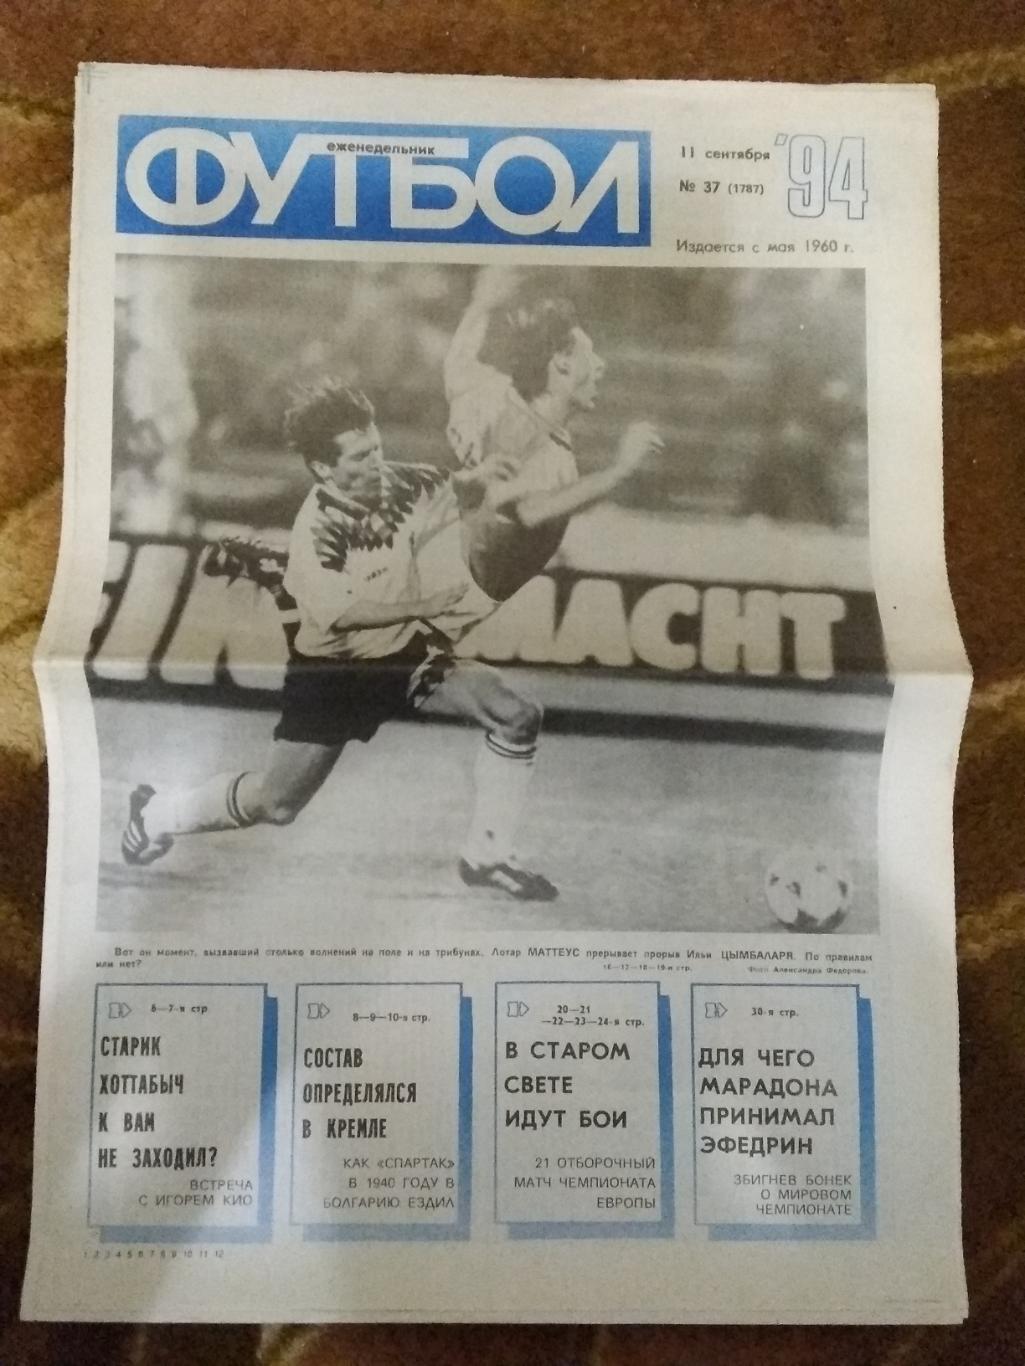 Футбол № 37 1994 г. (Россия - Германия МТМ).